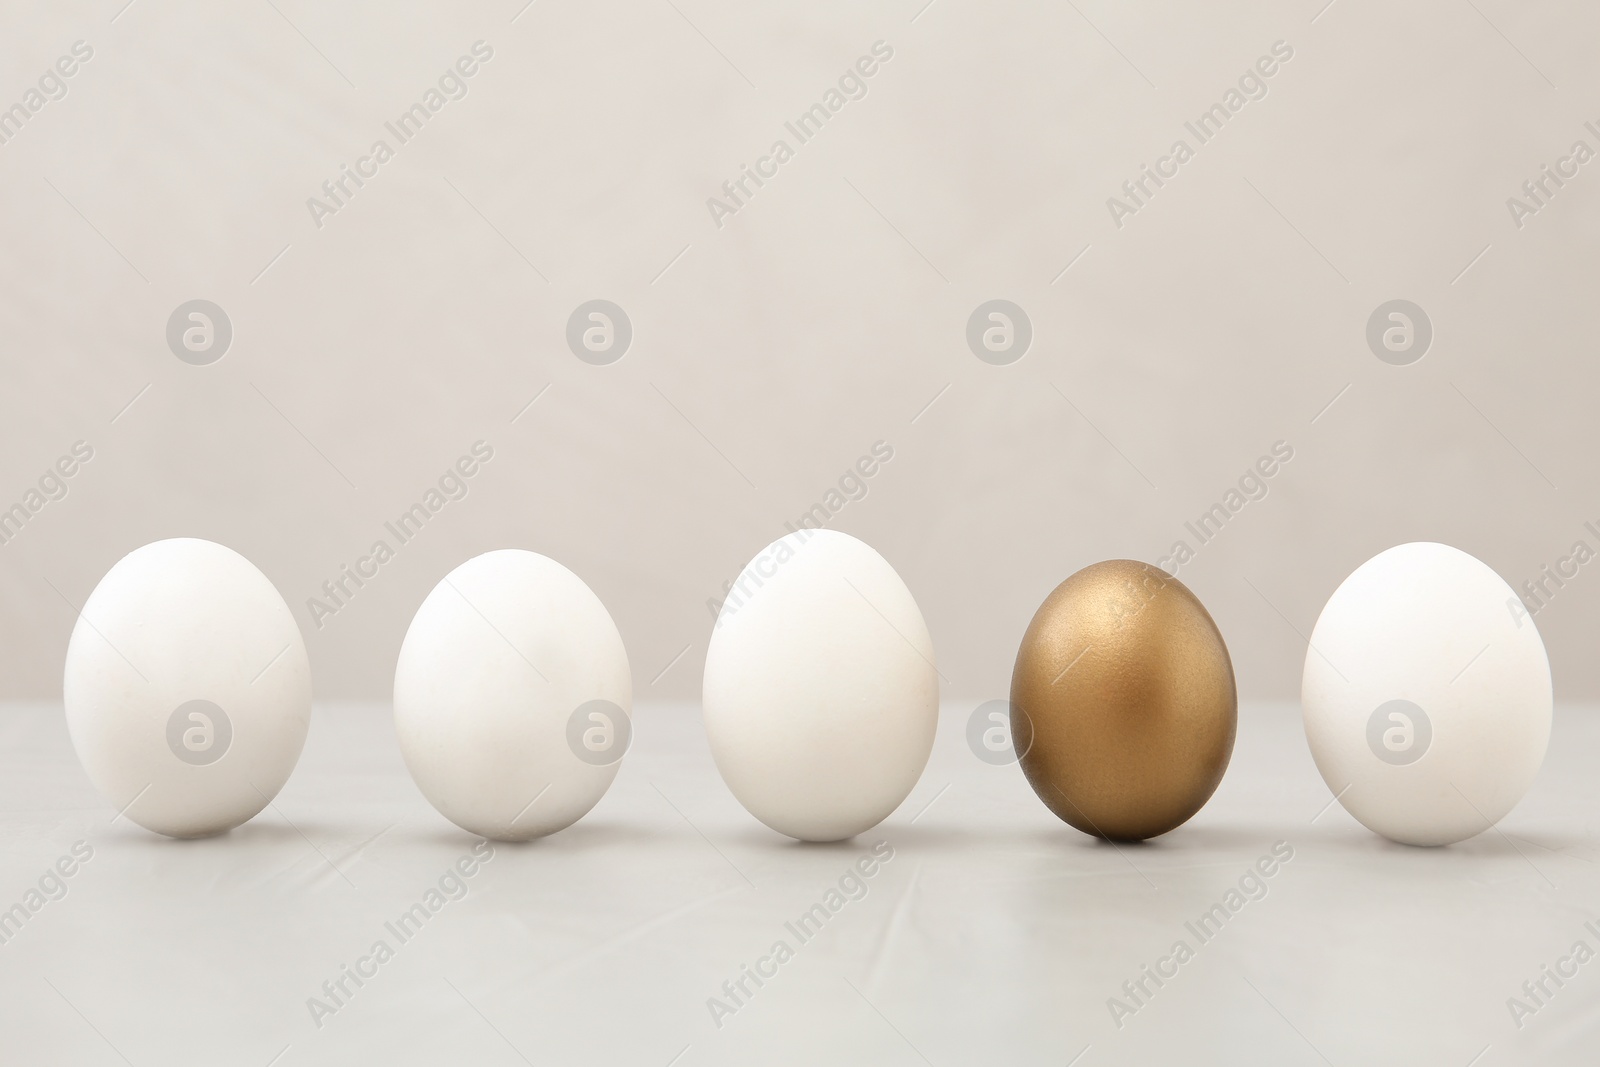 Photo of Golden egg among others on light background